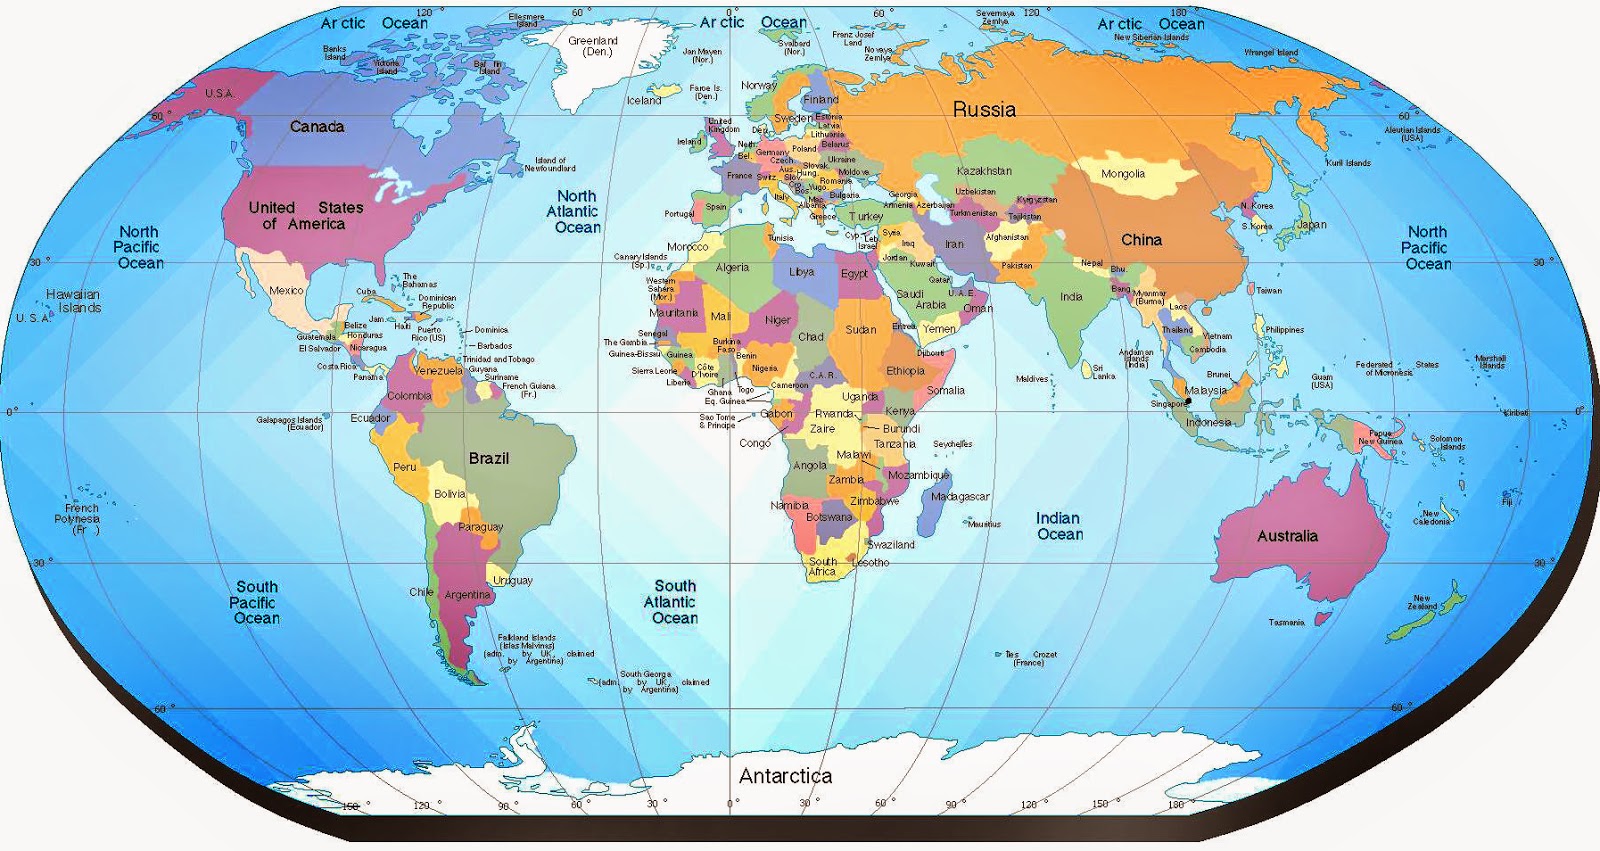 Manualidades escolares para decorar: Mapa mundo